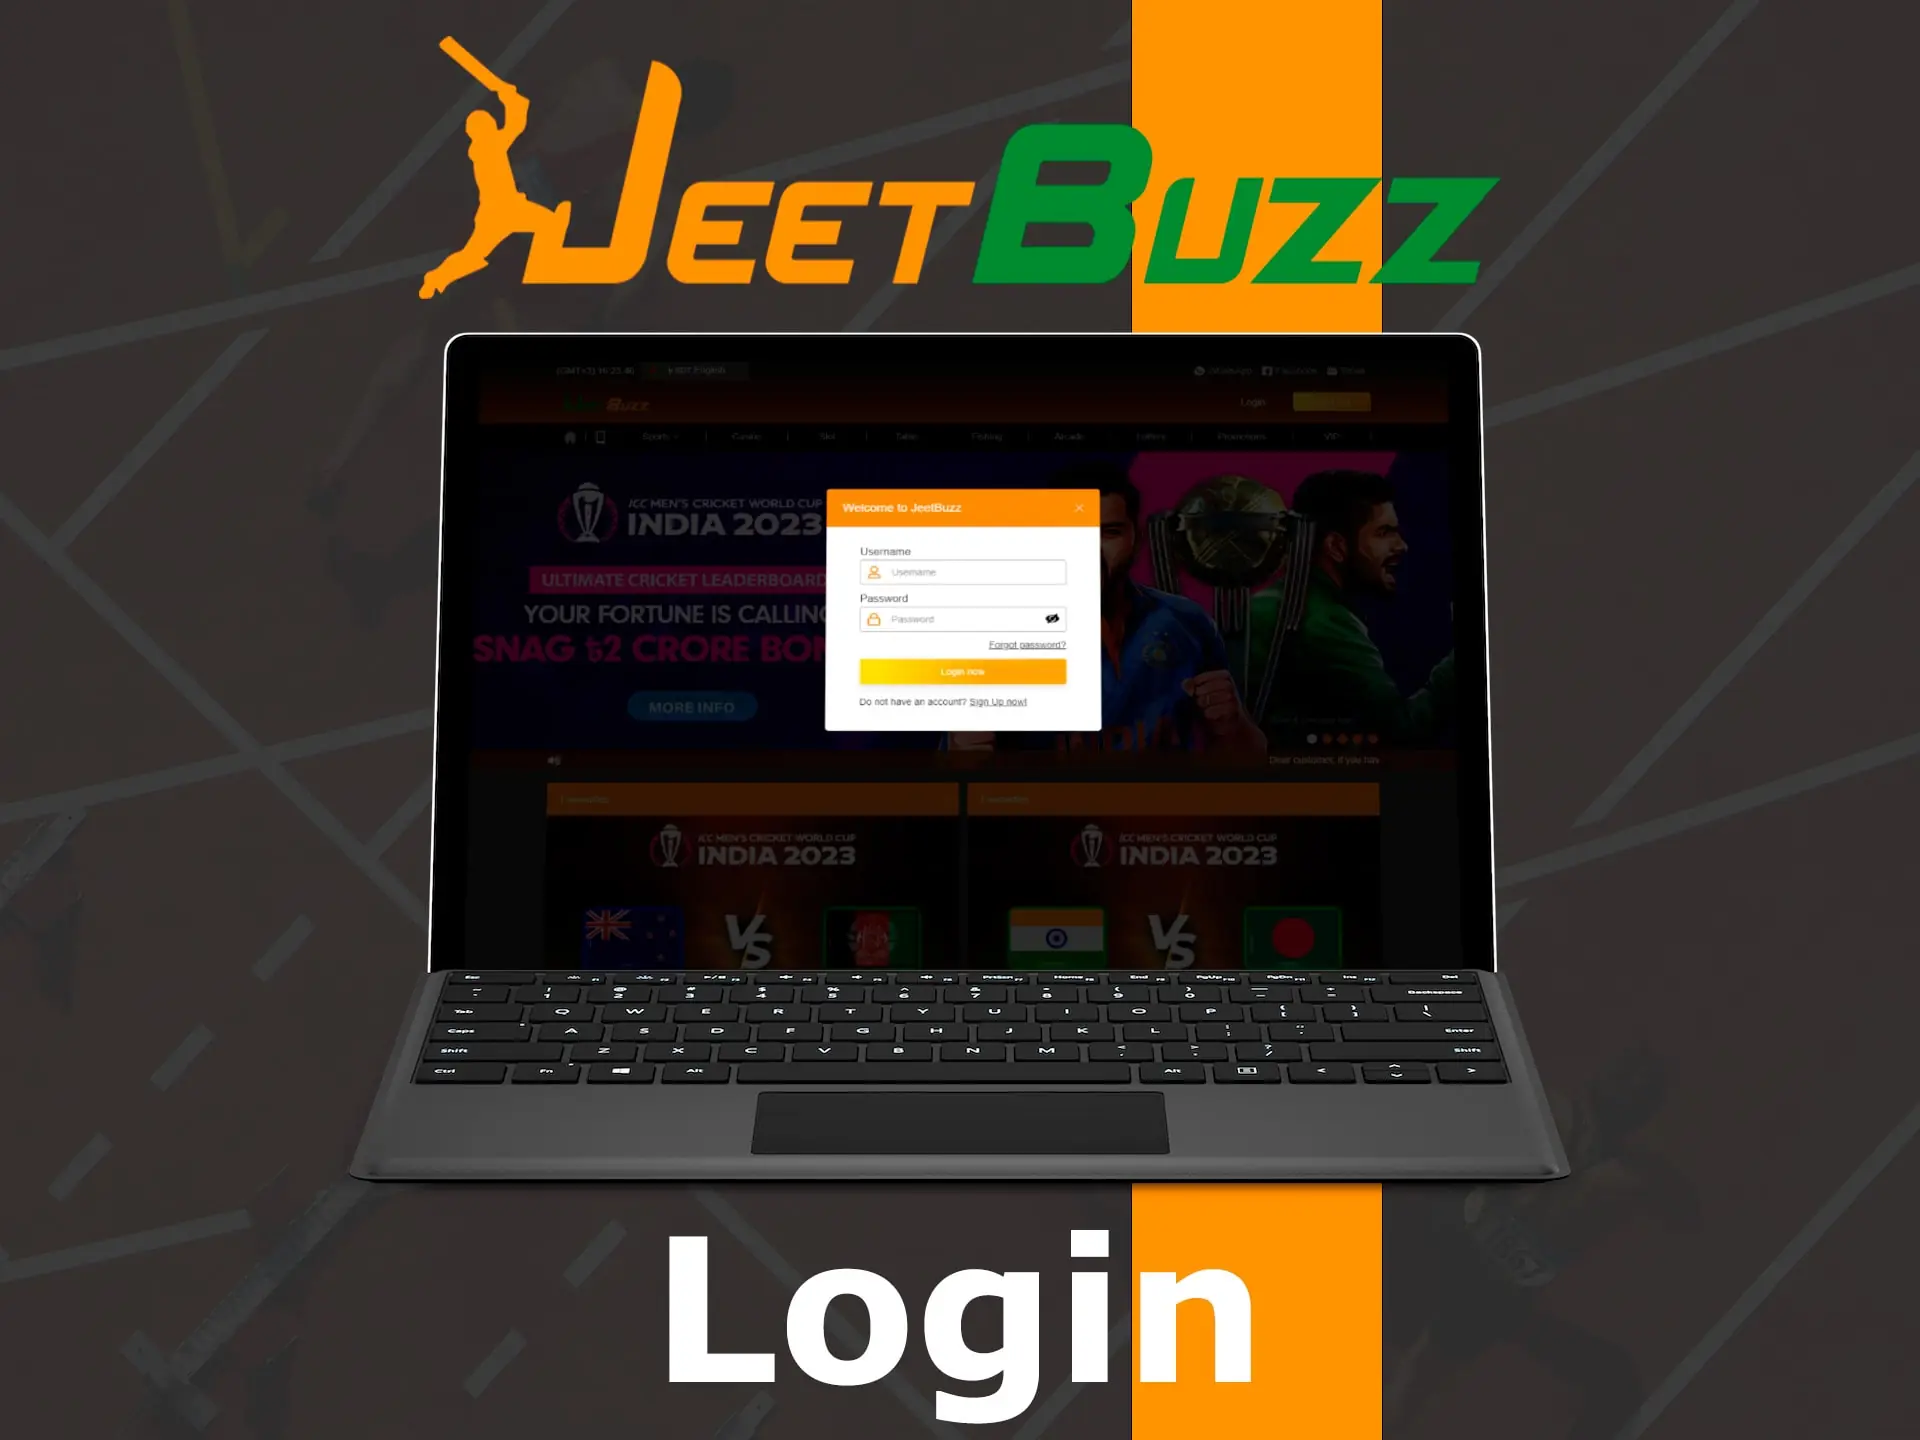 jeetbuzz login process